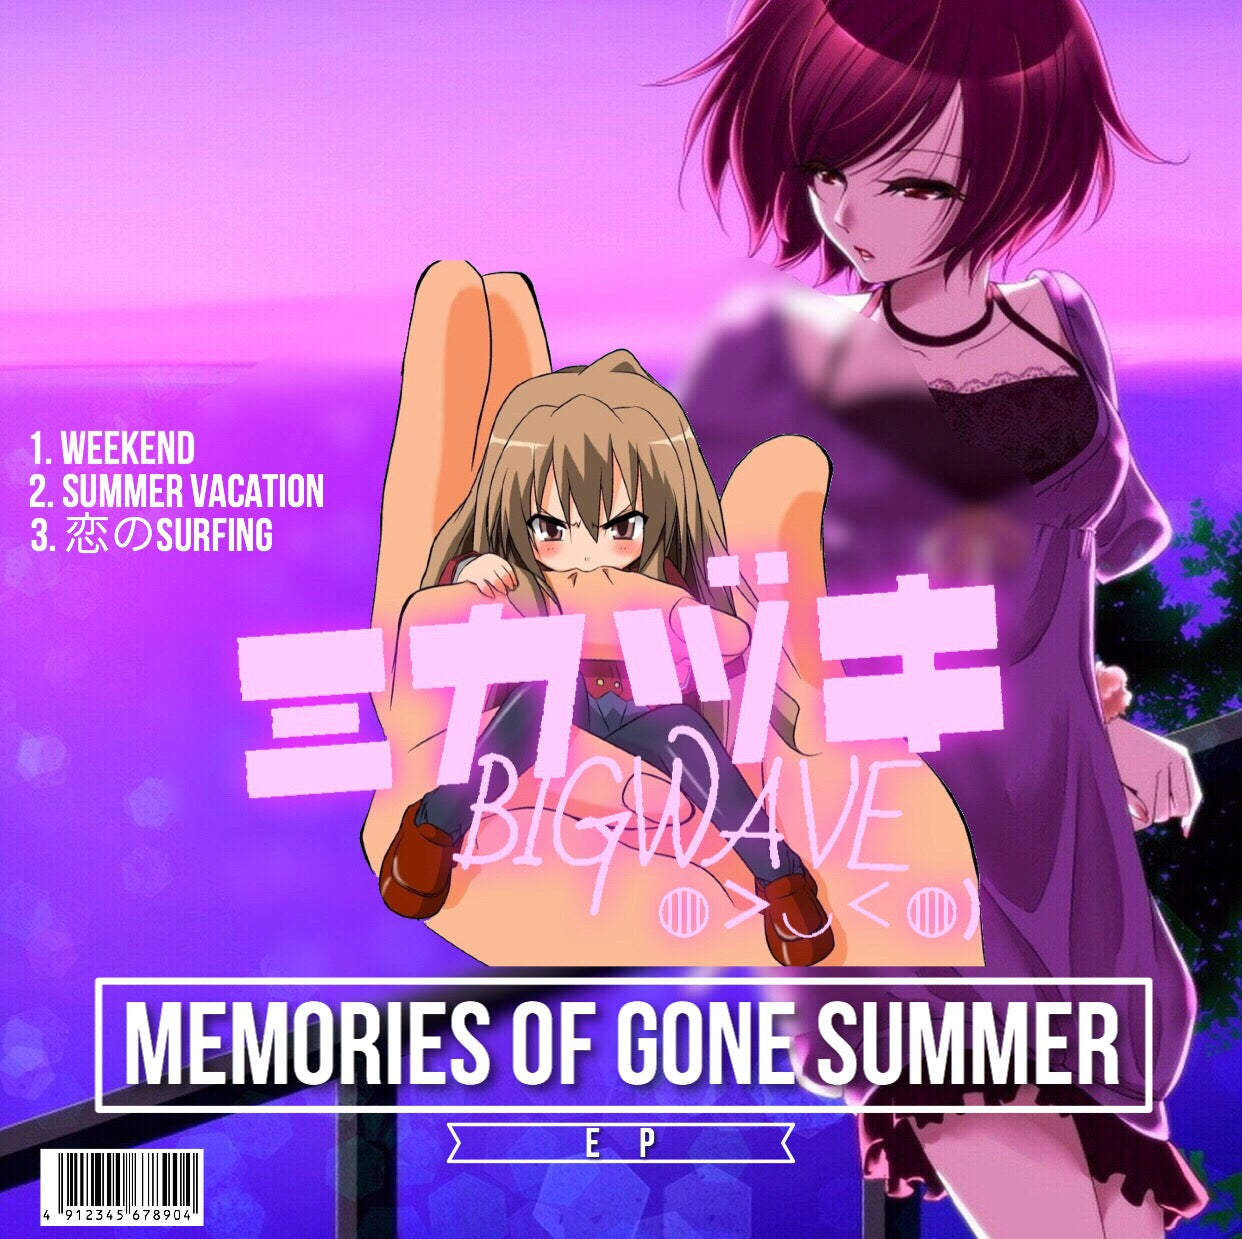 Memories of Gone Summer - EP